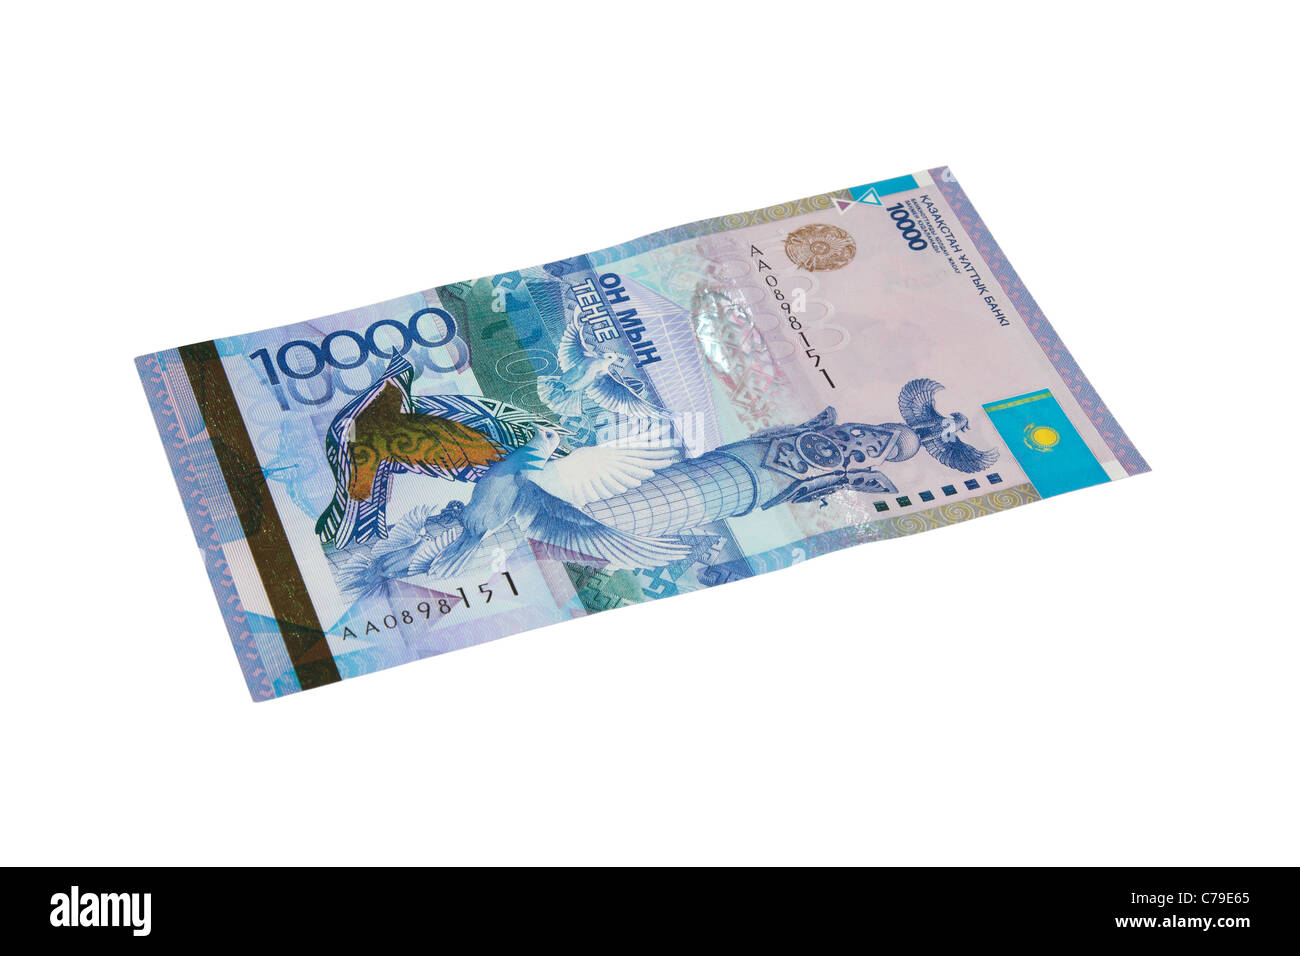 Money of Kazakhstan 10 000 Tenge. Close-up, isolated on a white background. Stock Photo